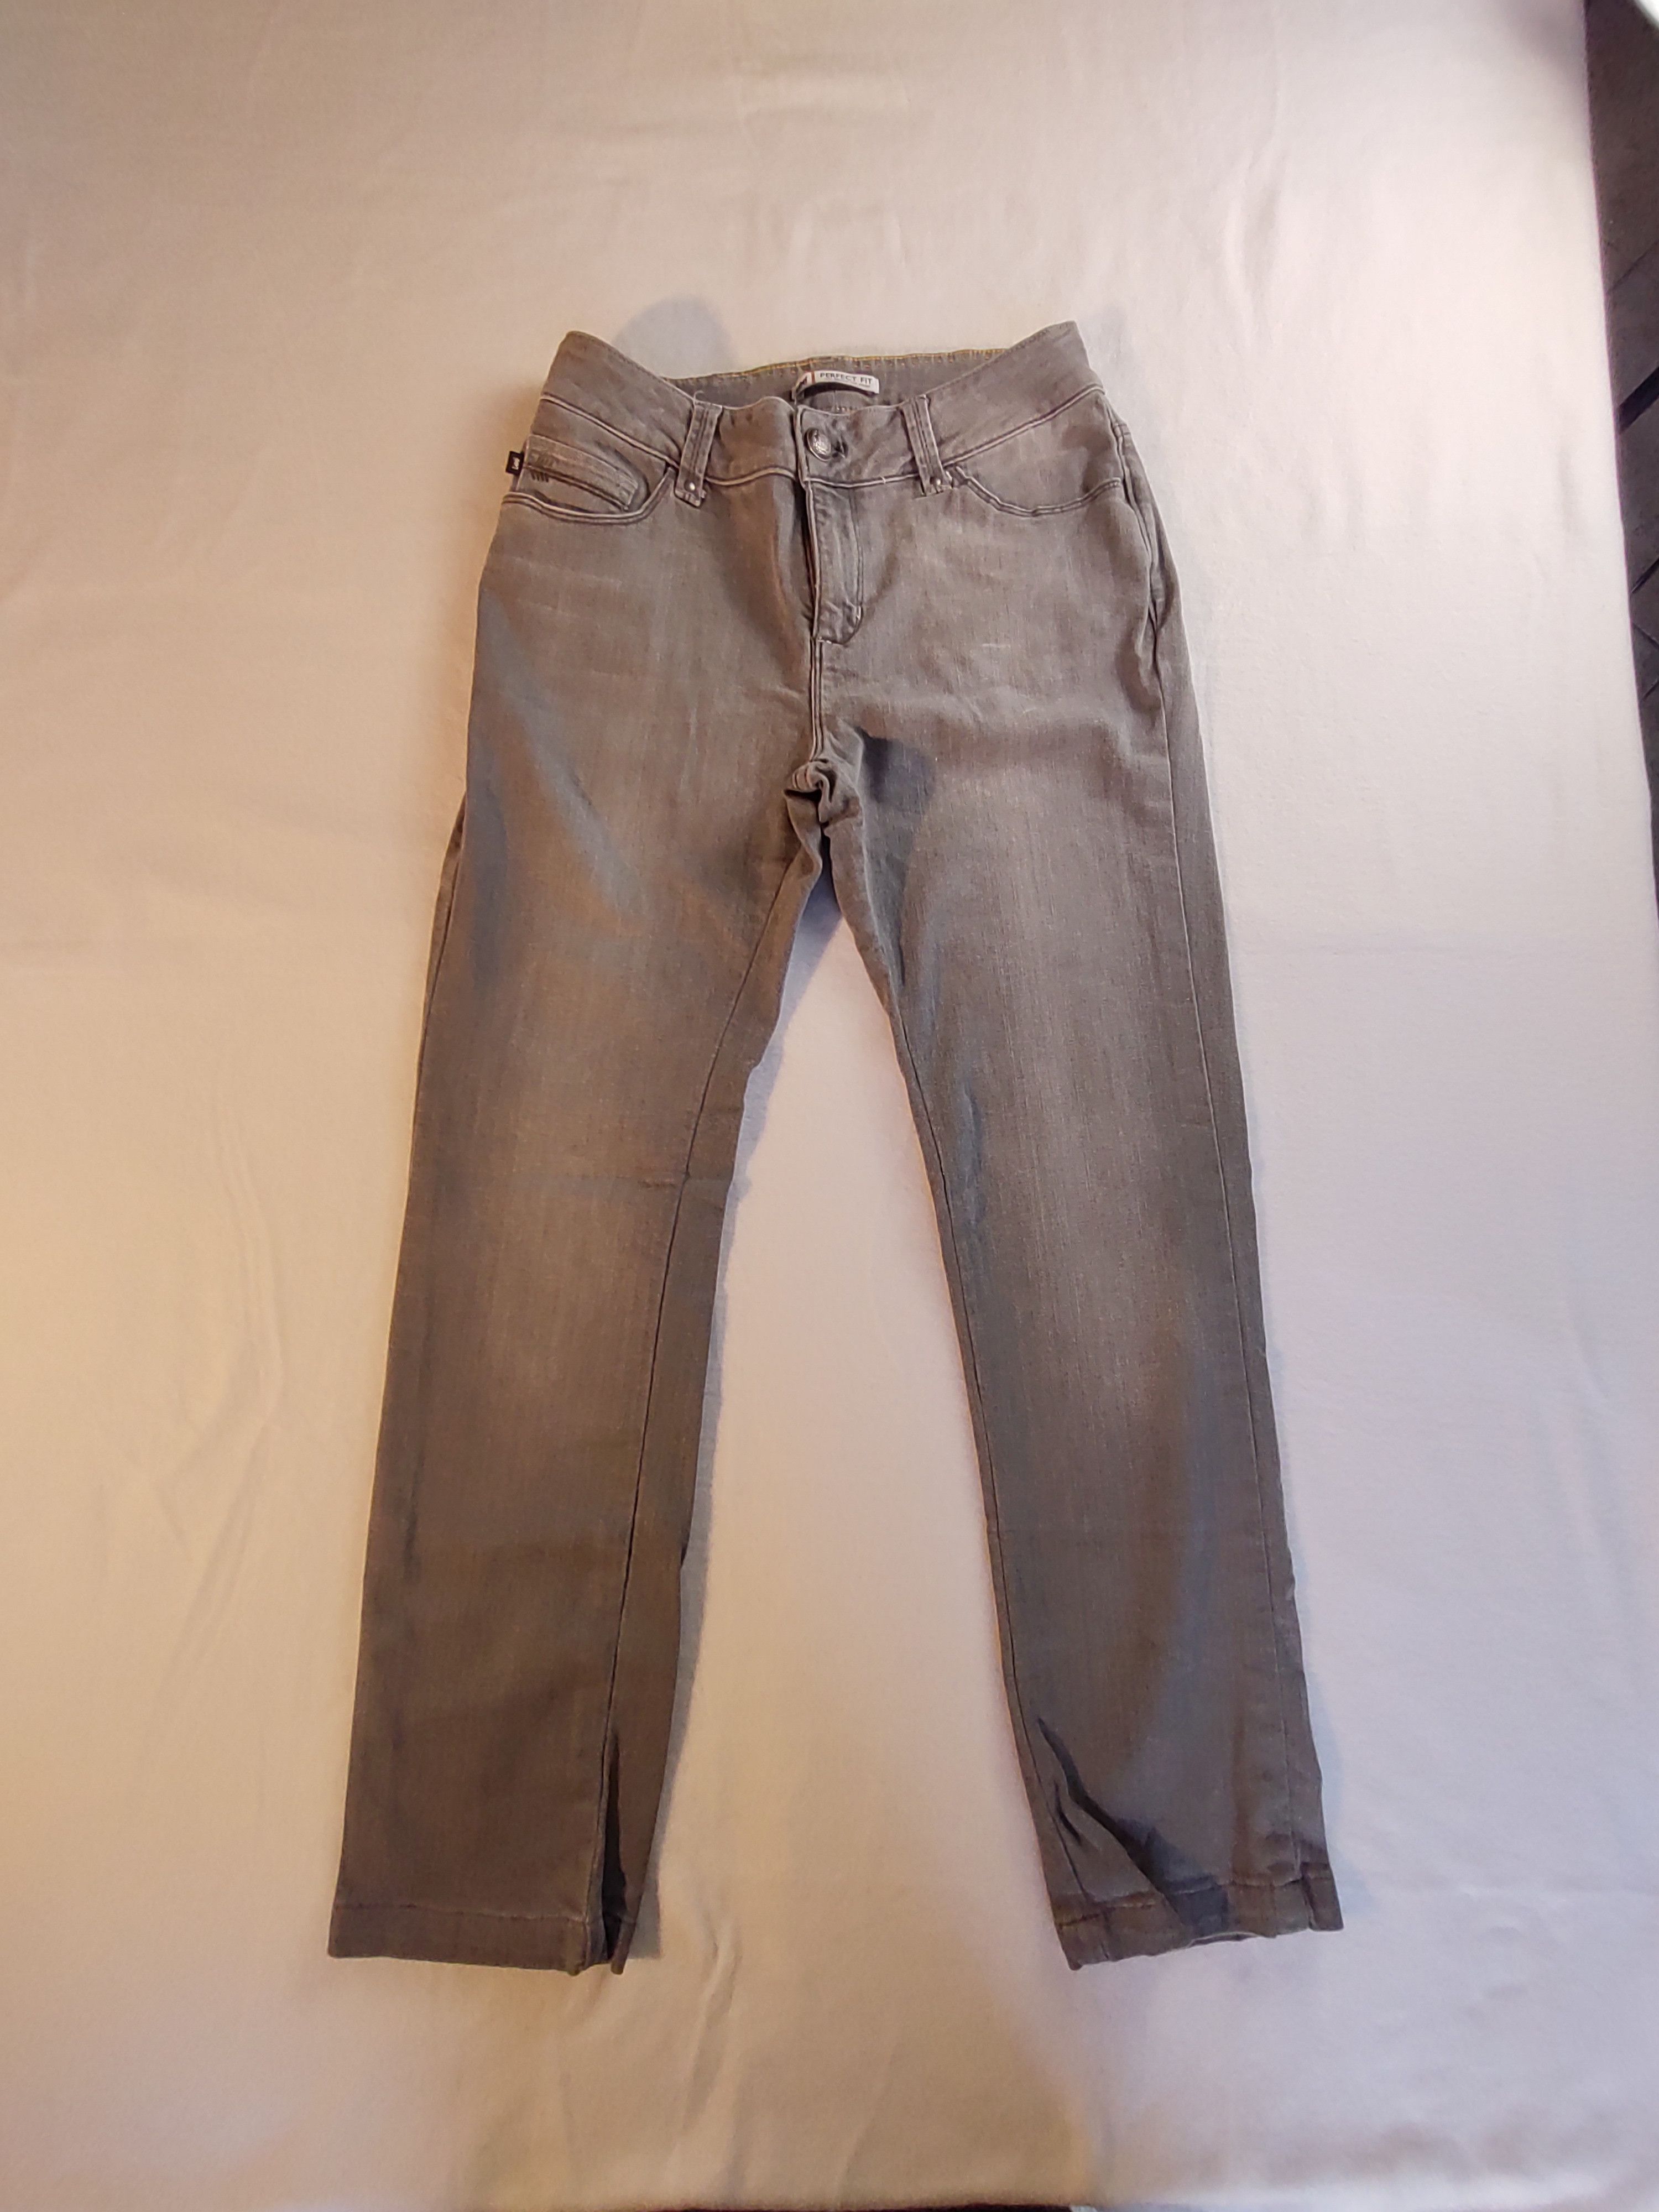 Lee Lee Perfect Fit Just Below Waist denim jeans gray ash wash Size 28" / US 6 / IT 42 - 15 Preview